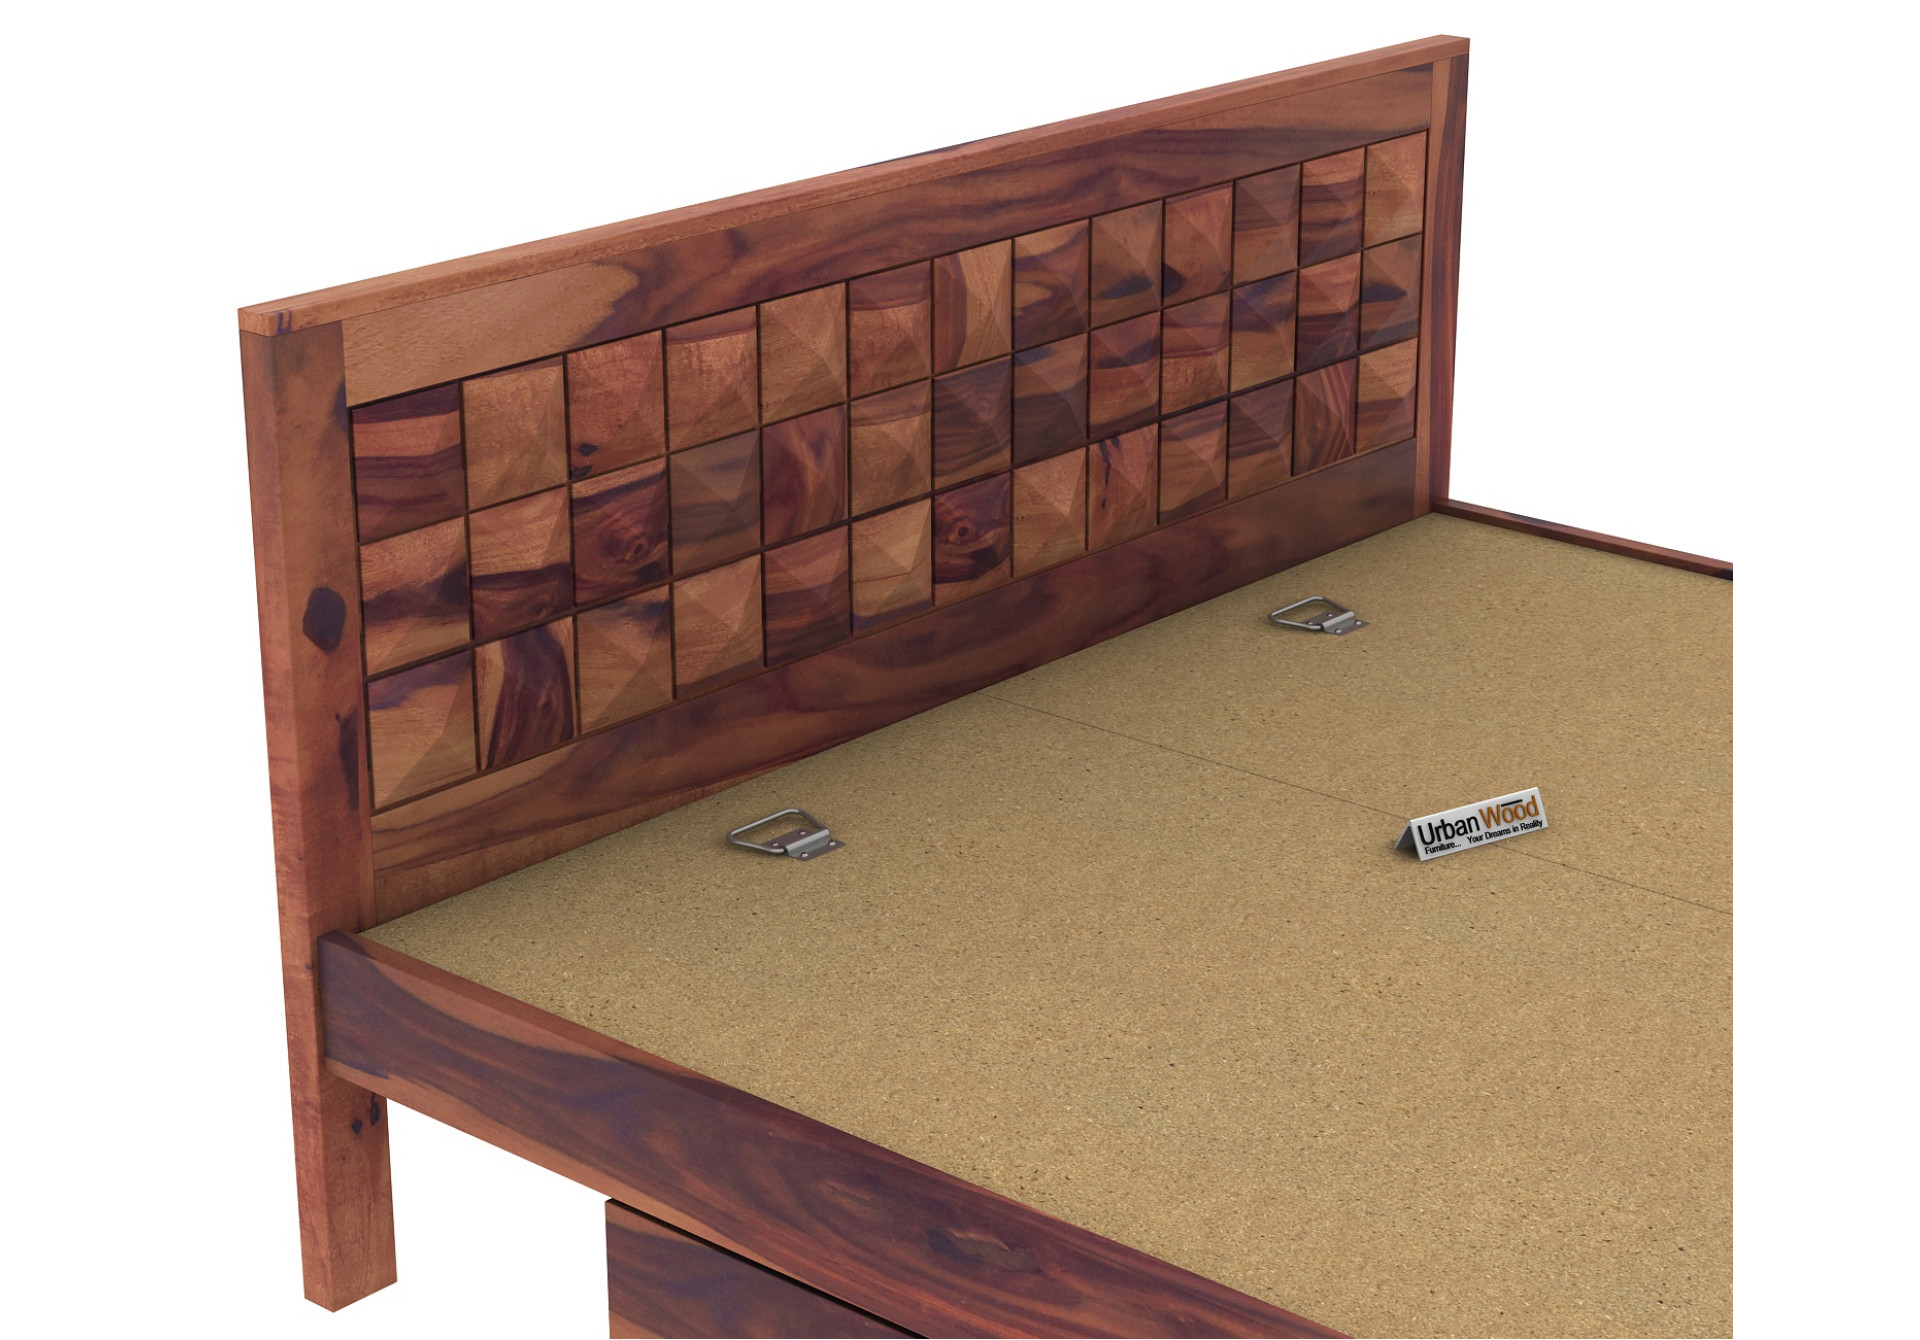 Morgana Bed With Drawer Storage ( King Size, Teak Finish )